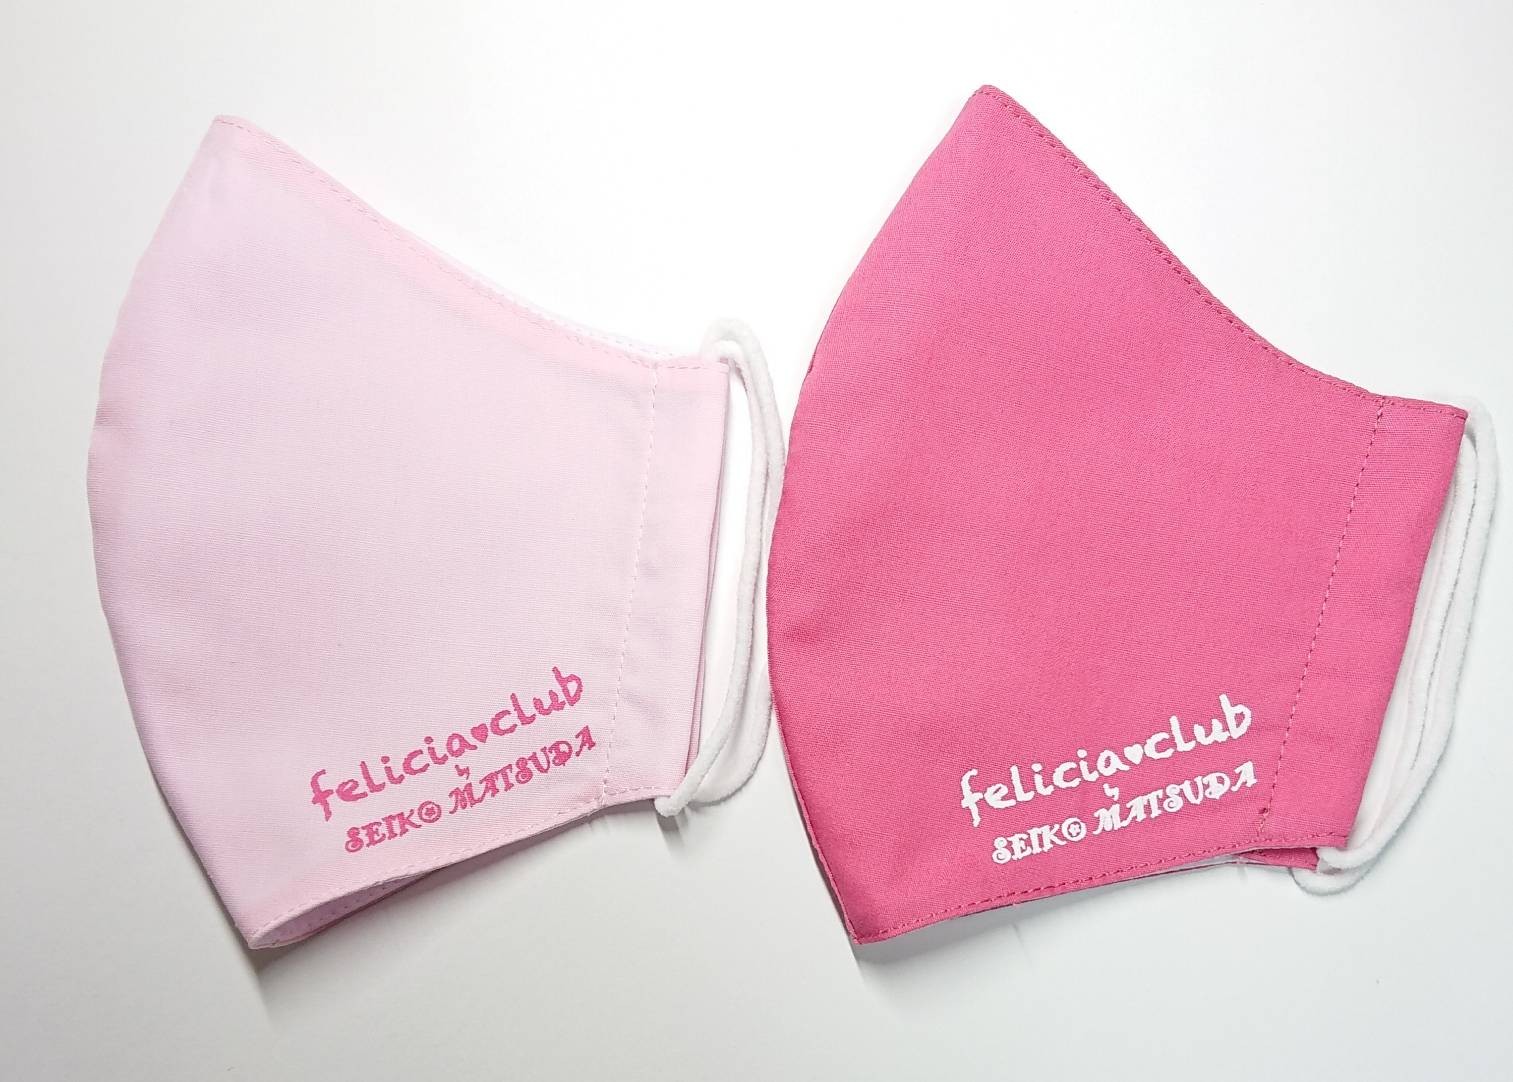 Feliciaロゴマスクセットl Pink Pink 松田聖子 Felicia Club By Seiko Matsuda Online Happy Shop オンラインストア